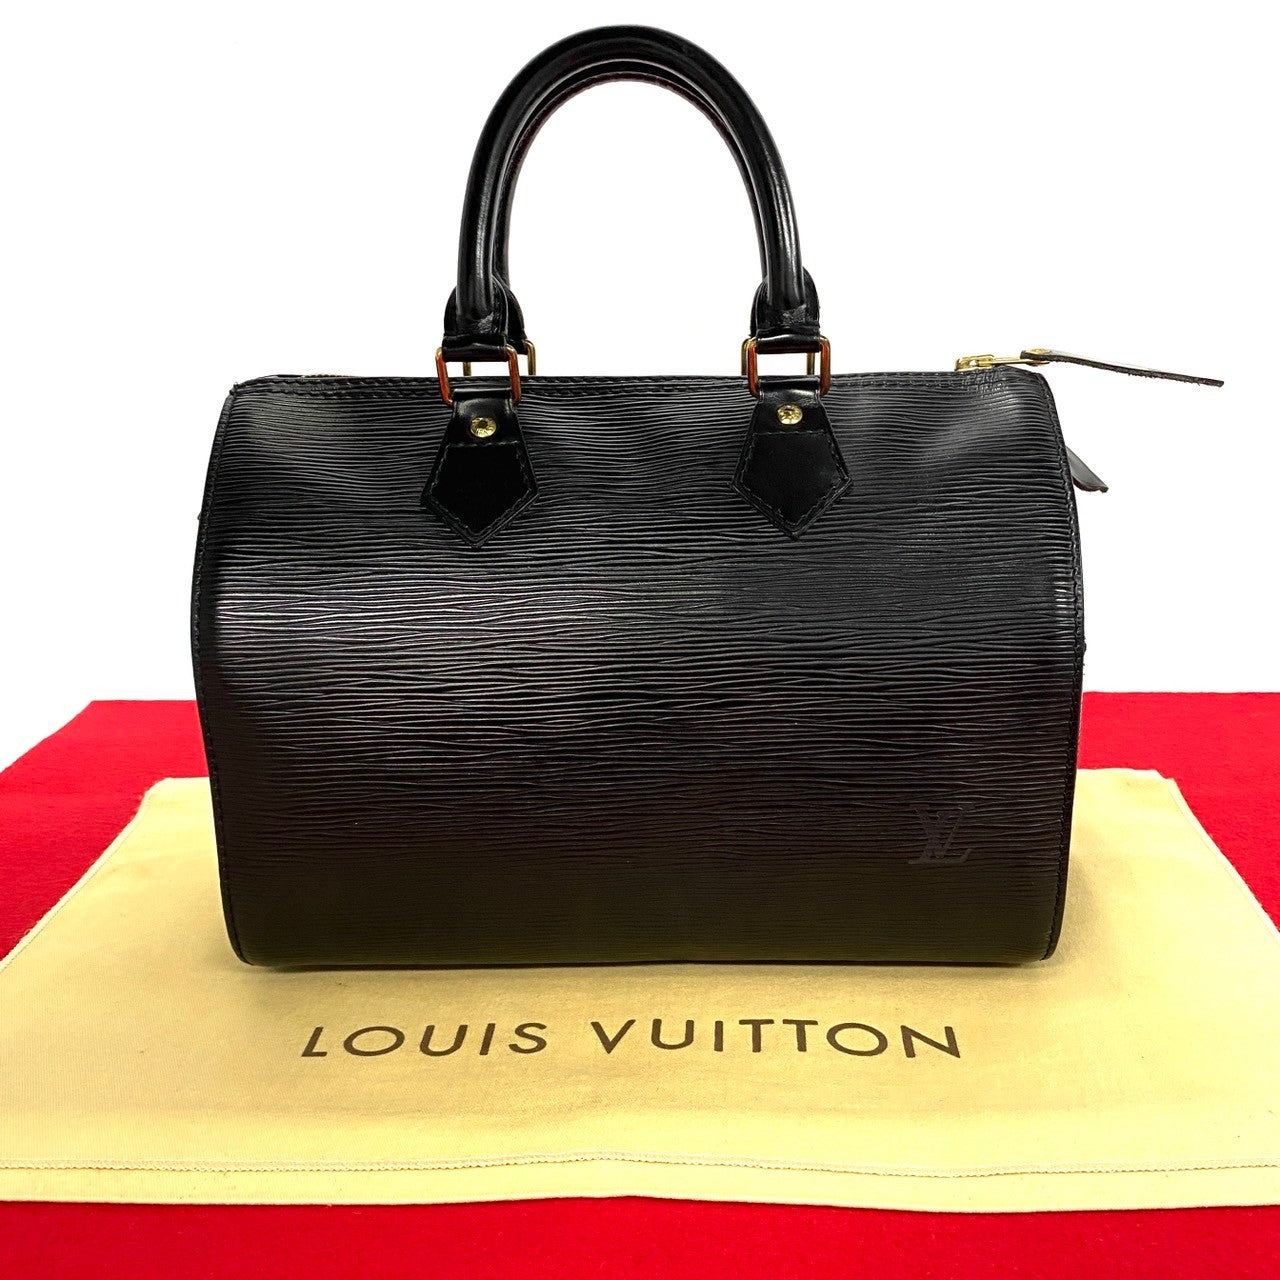 Louis Vuitton Speedy 25 Leather Handbag M43012 in Excellent condition